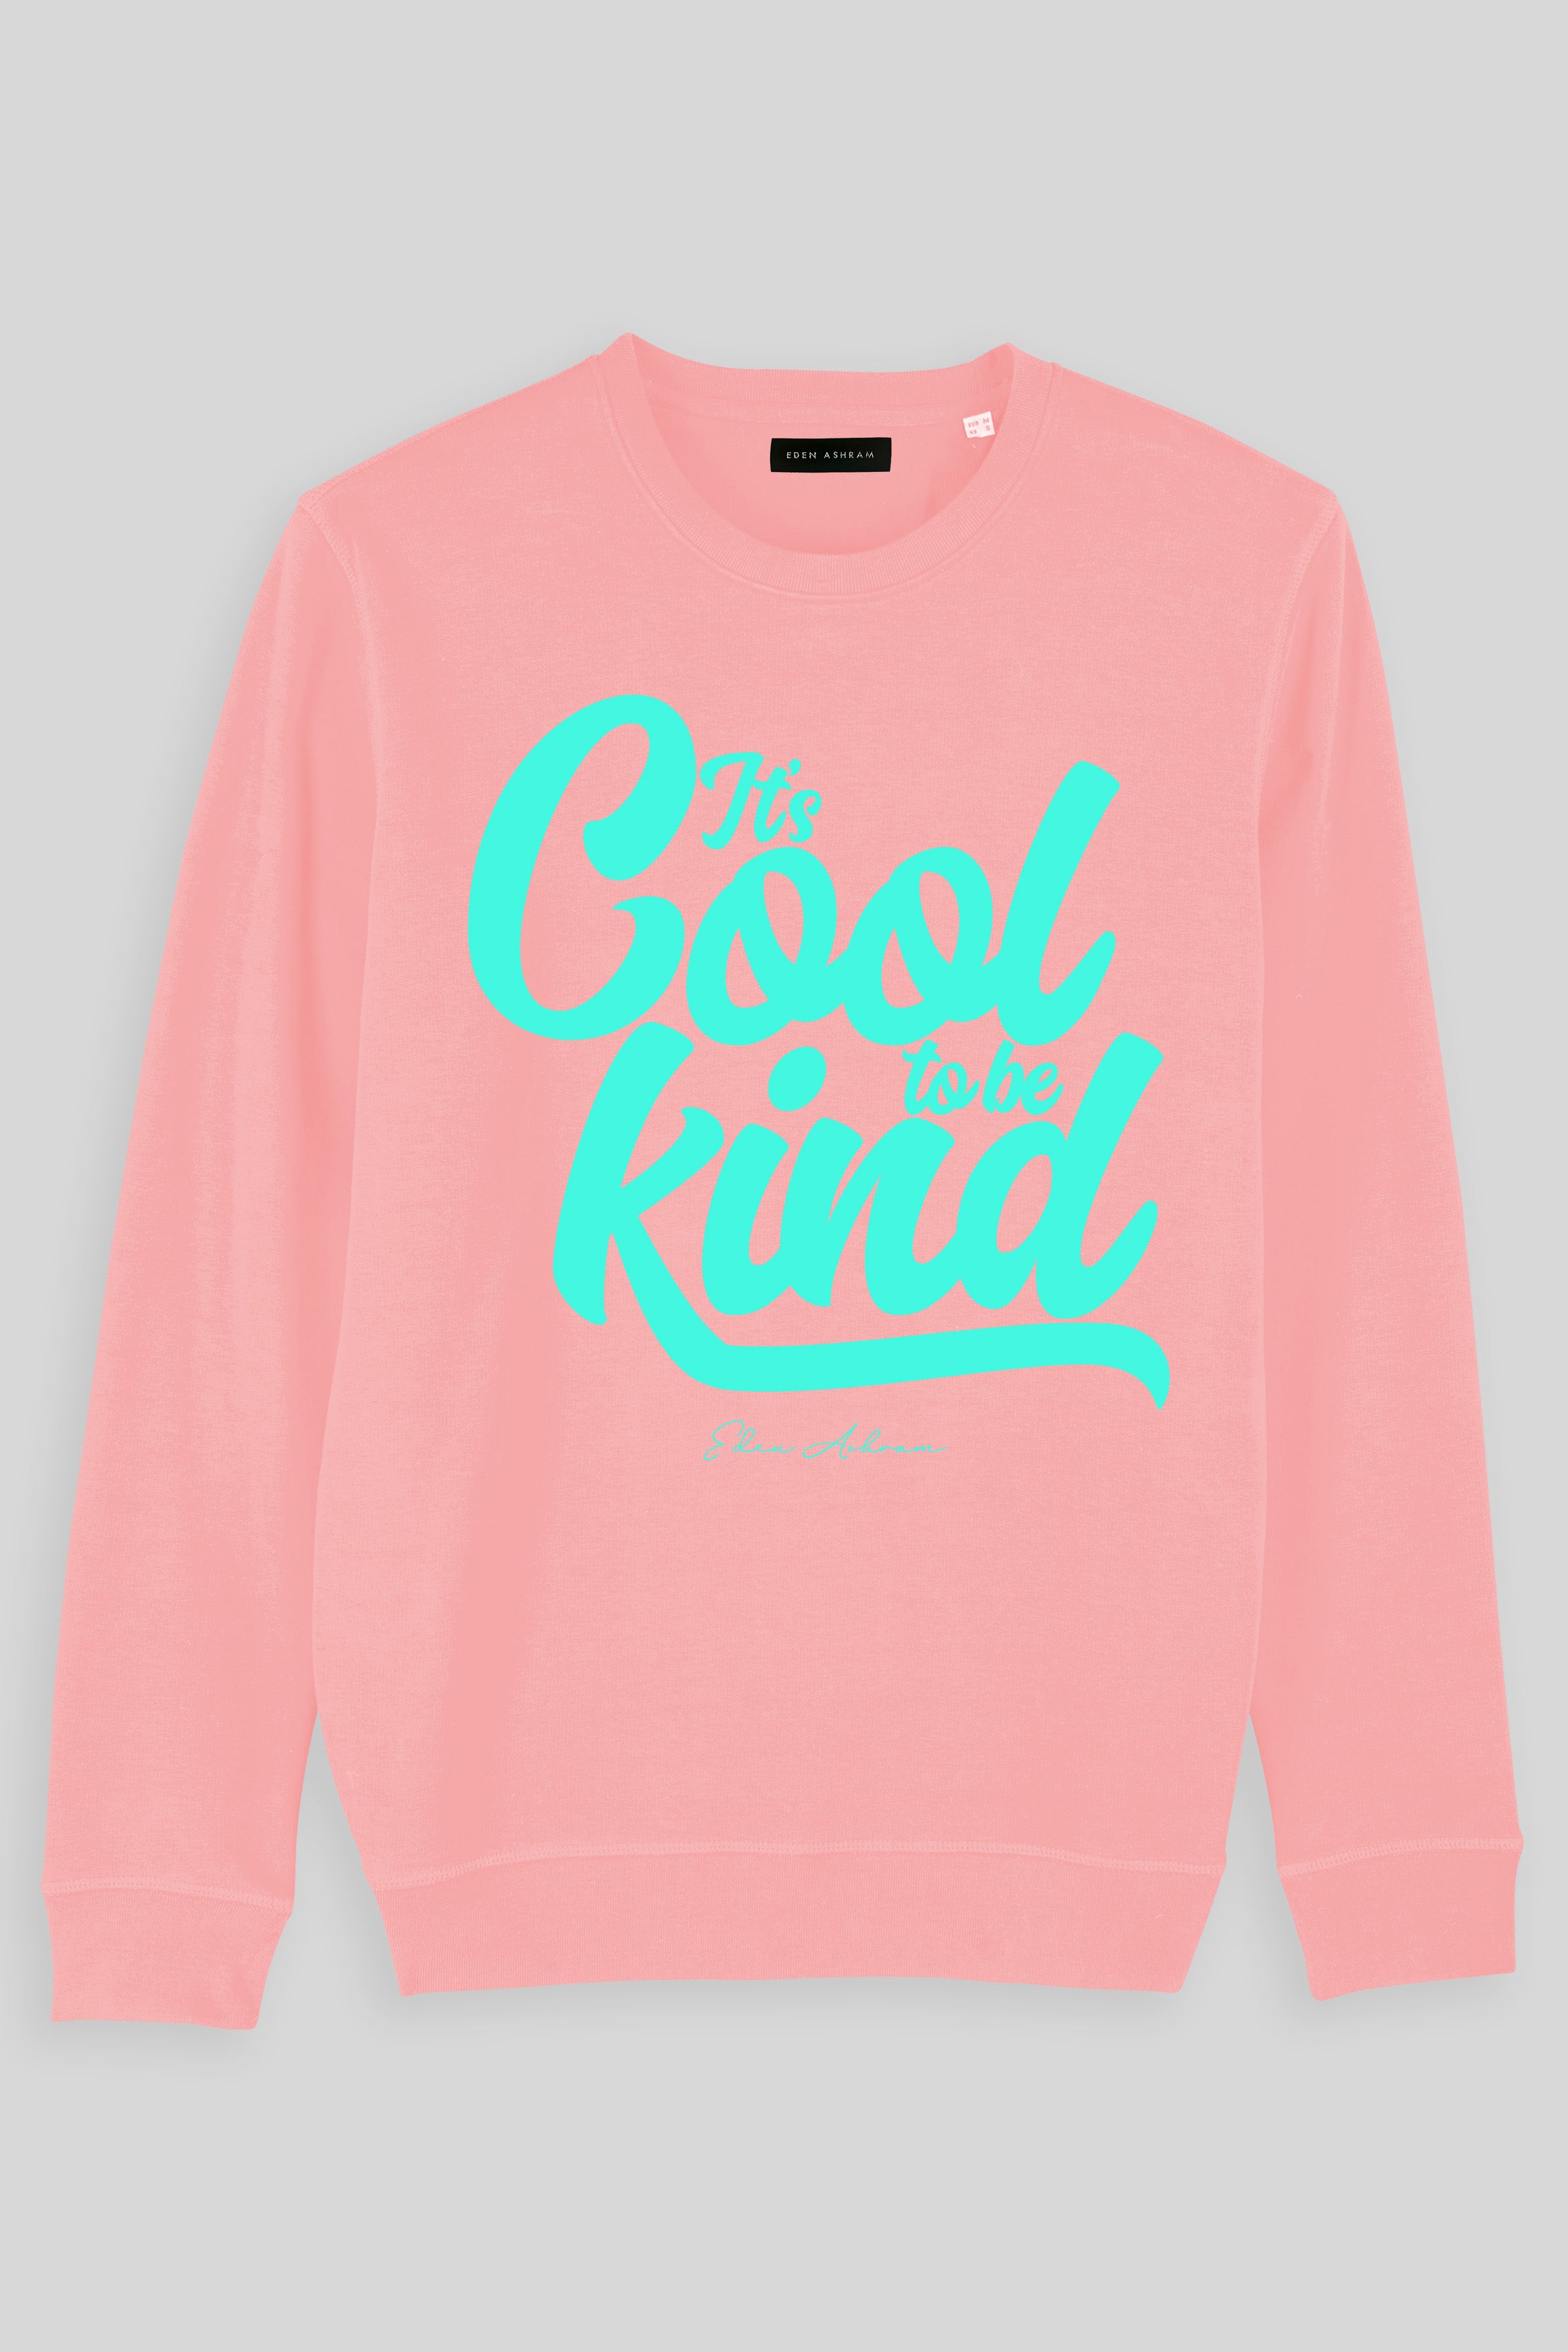 Eden Ashram It's Cool To Be Kind Premium Crew Neck Sweatshirt Coral Pink